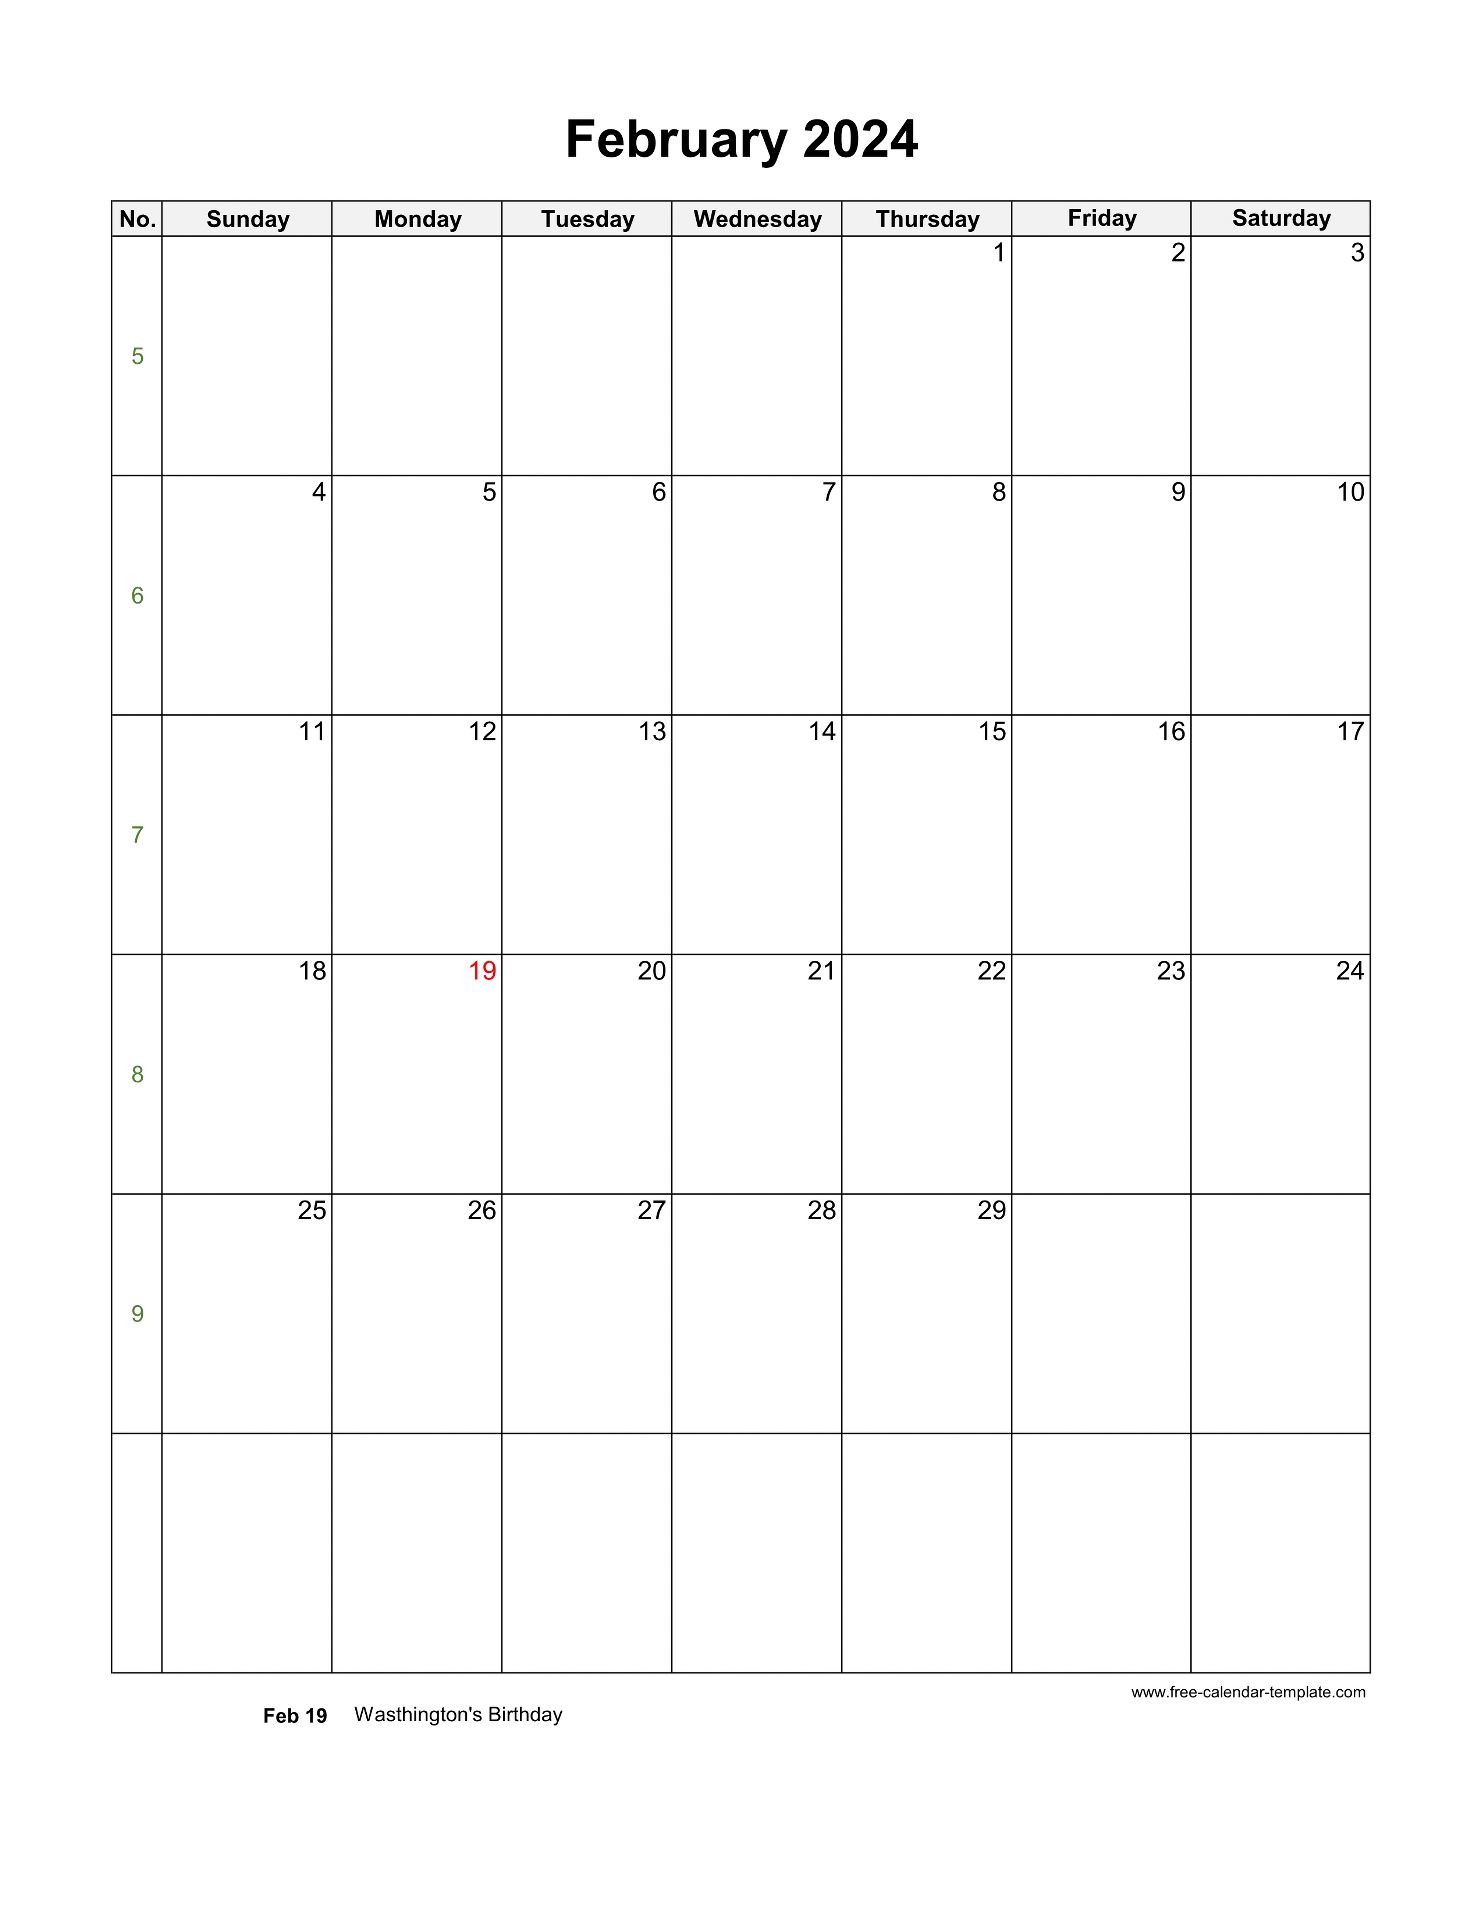 2024 February Calendar (Blank Vertical Template) | Free-calendar ...